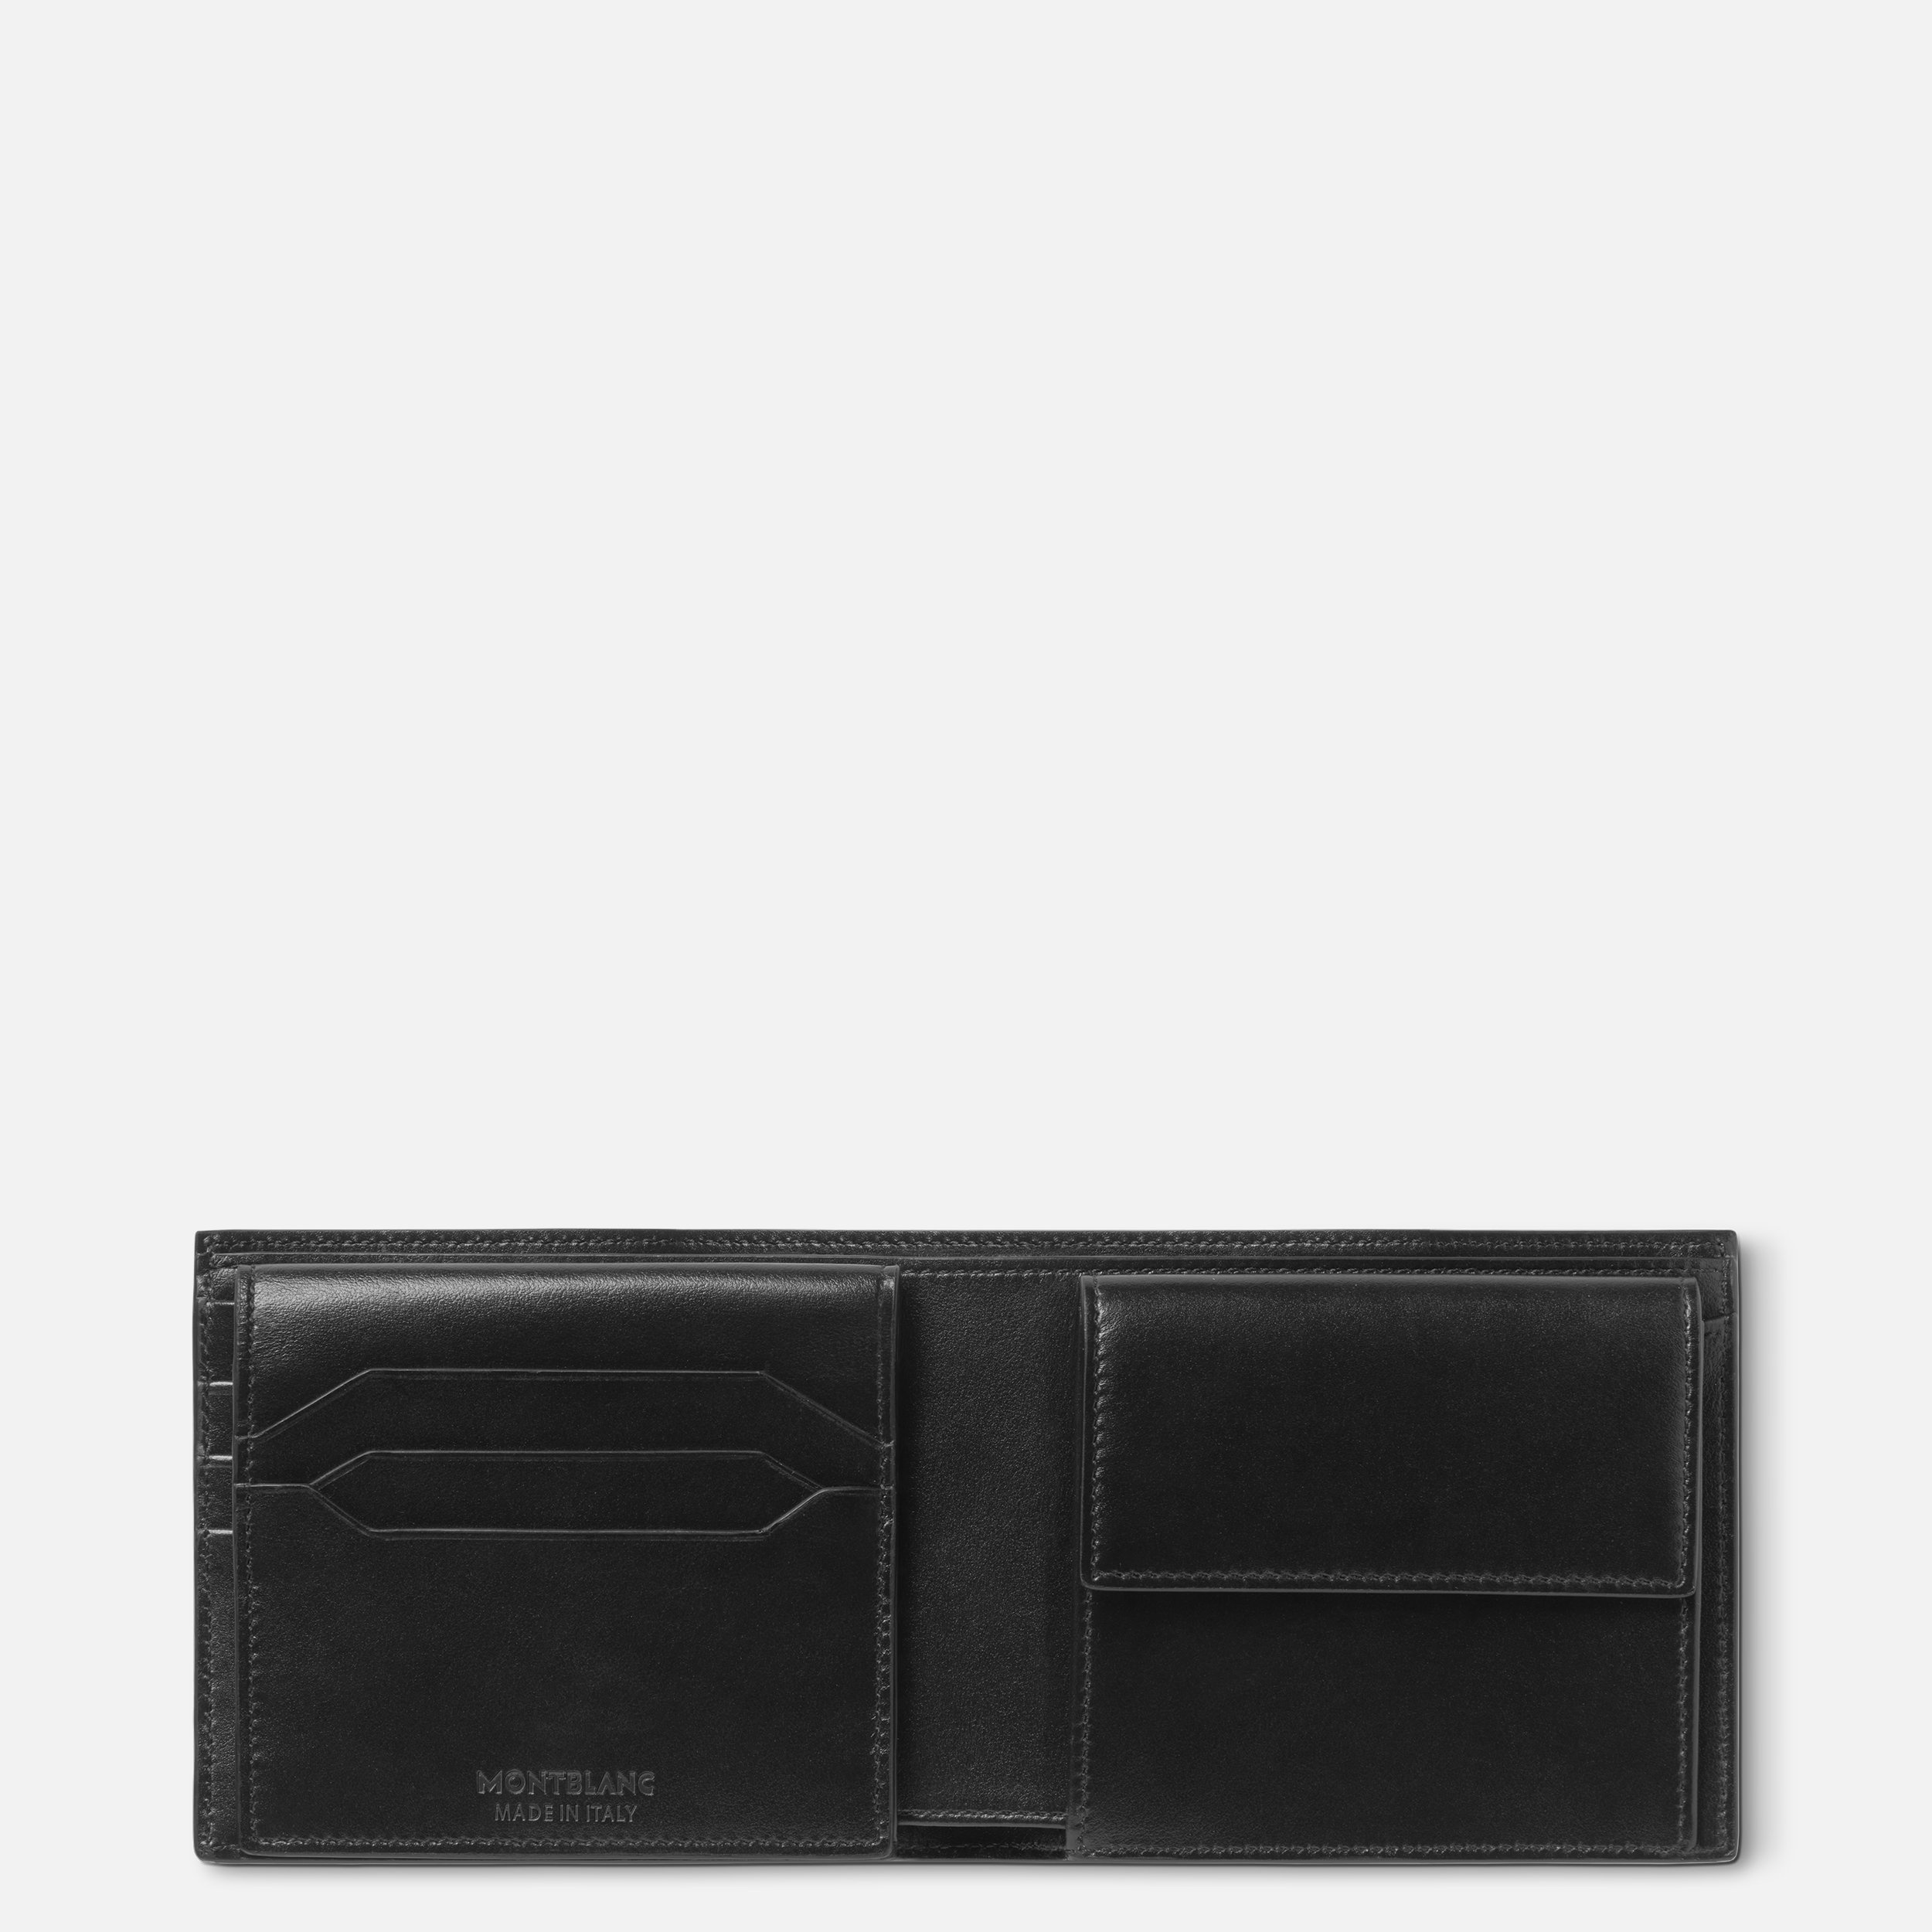 Meisterstück wallet 10cc with coin case - 5